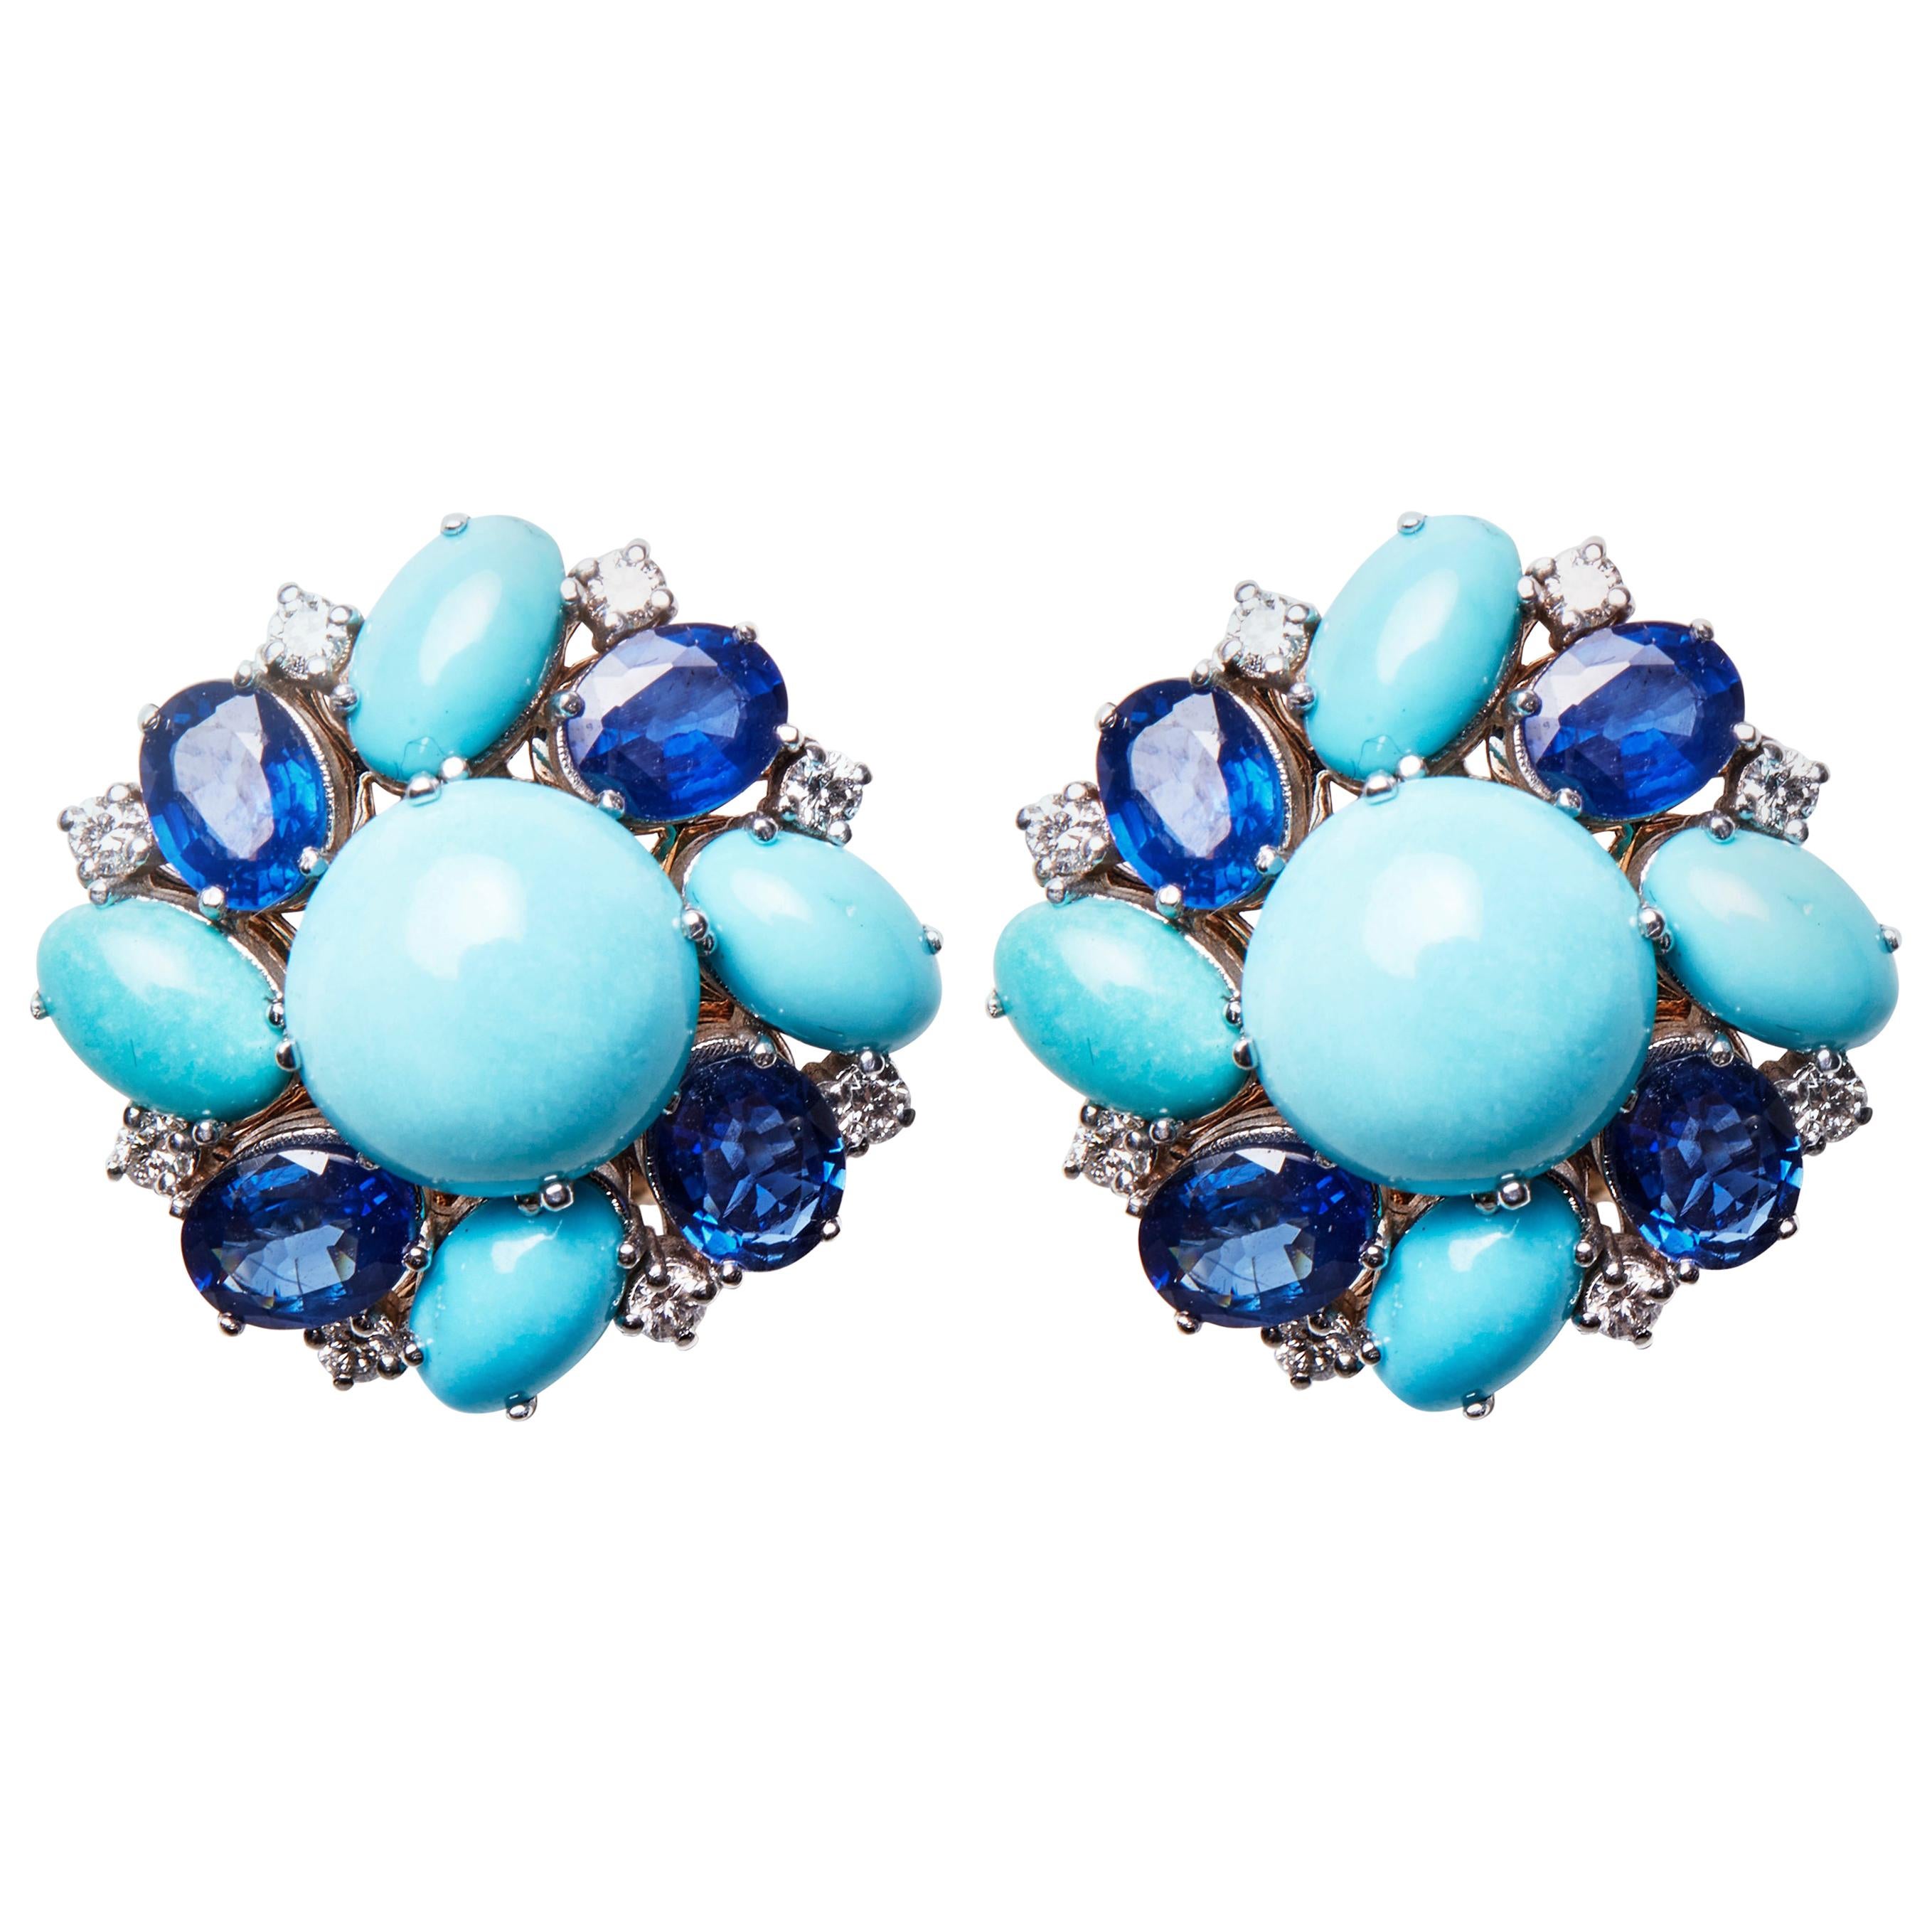 18 Karat White Gold Diamond, Sapphire and Turquoise Earrings